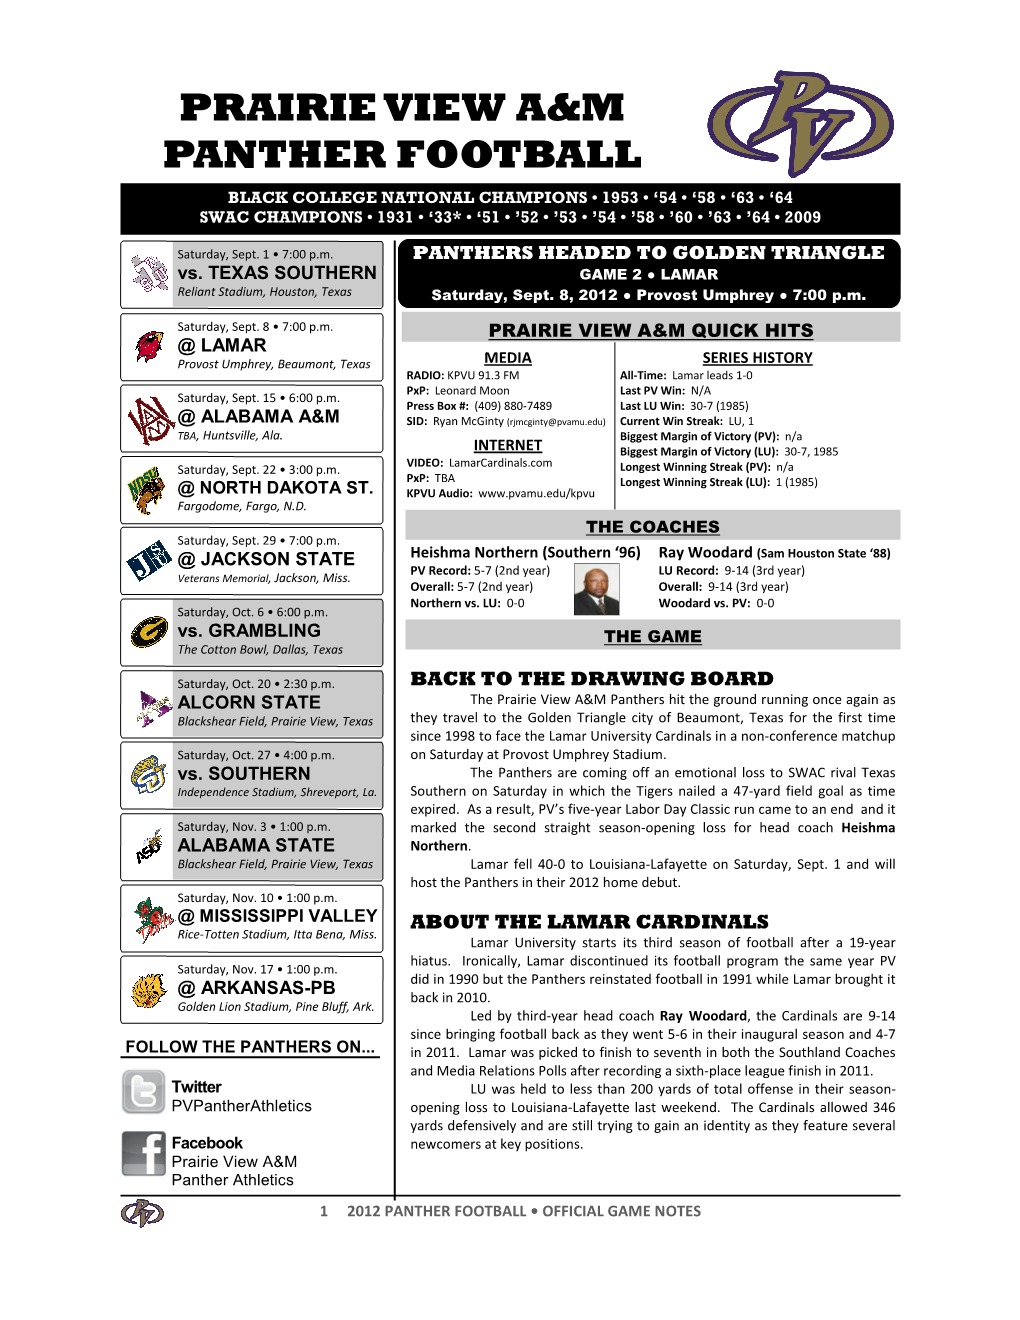 Prairie View A&M Panther Football